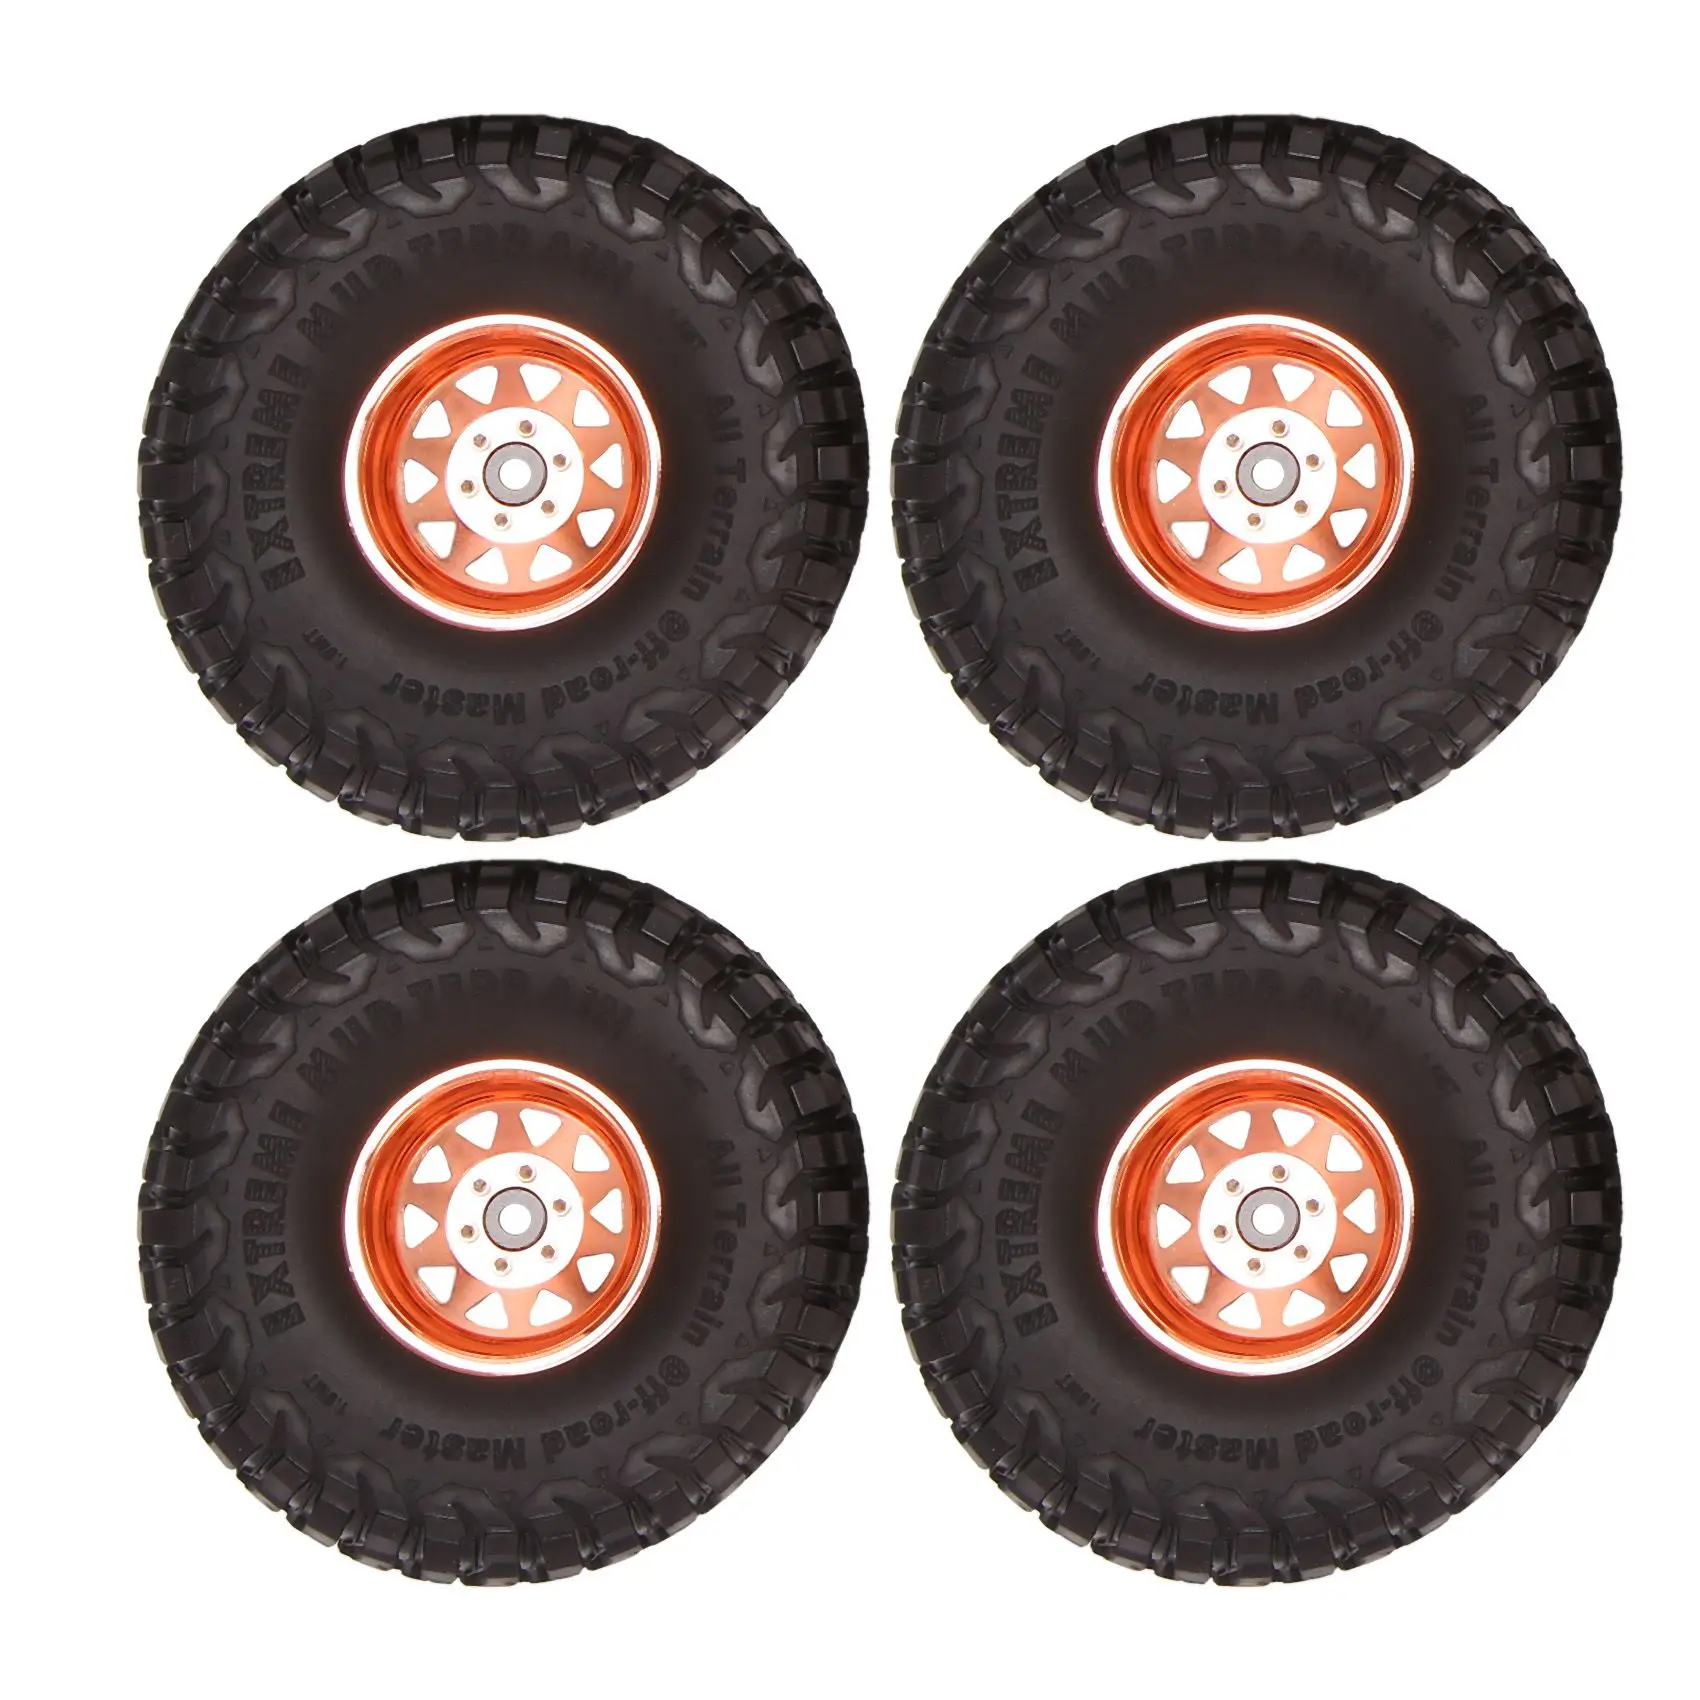 

4PCS Deep Dish Wagon 120mm 1.9 Beadlock Wheel Rim Tire Set for 1/10 RC Crawler Car Axial SCX10 Traxxas TRX4 RC4WD D90,A